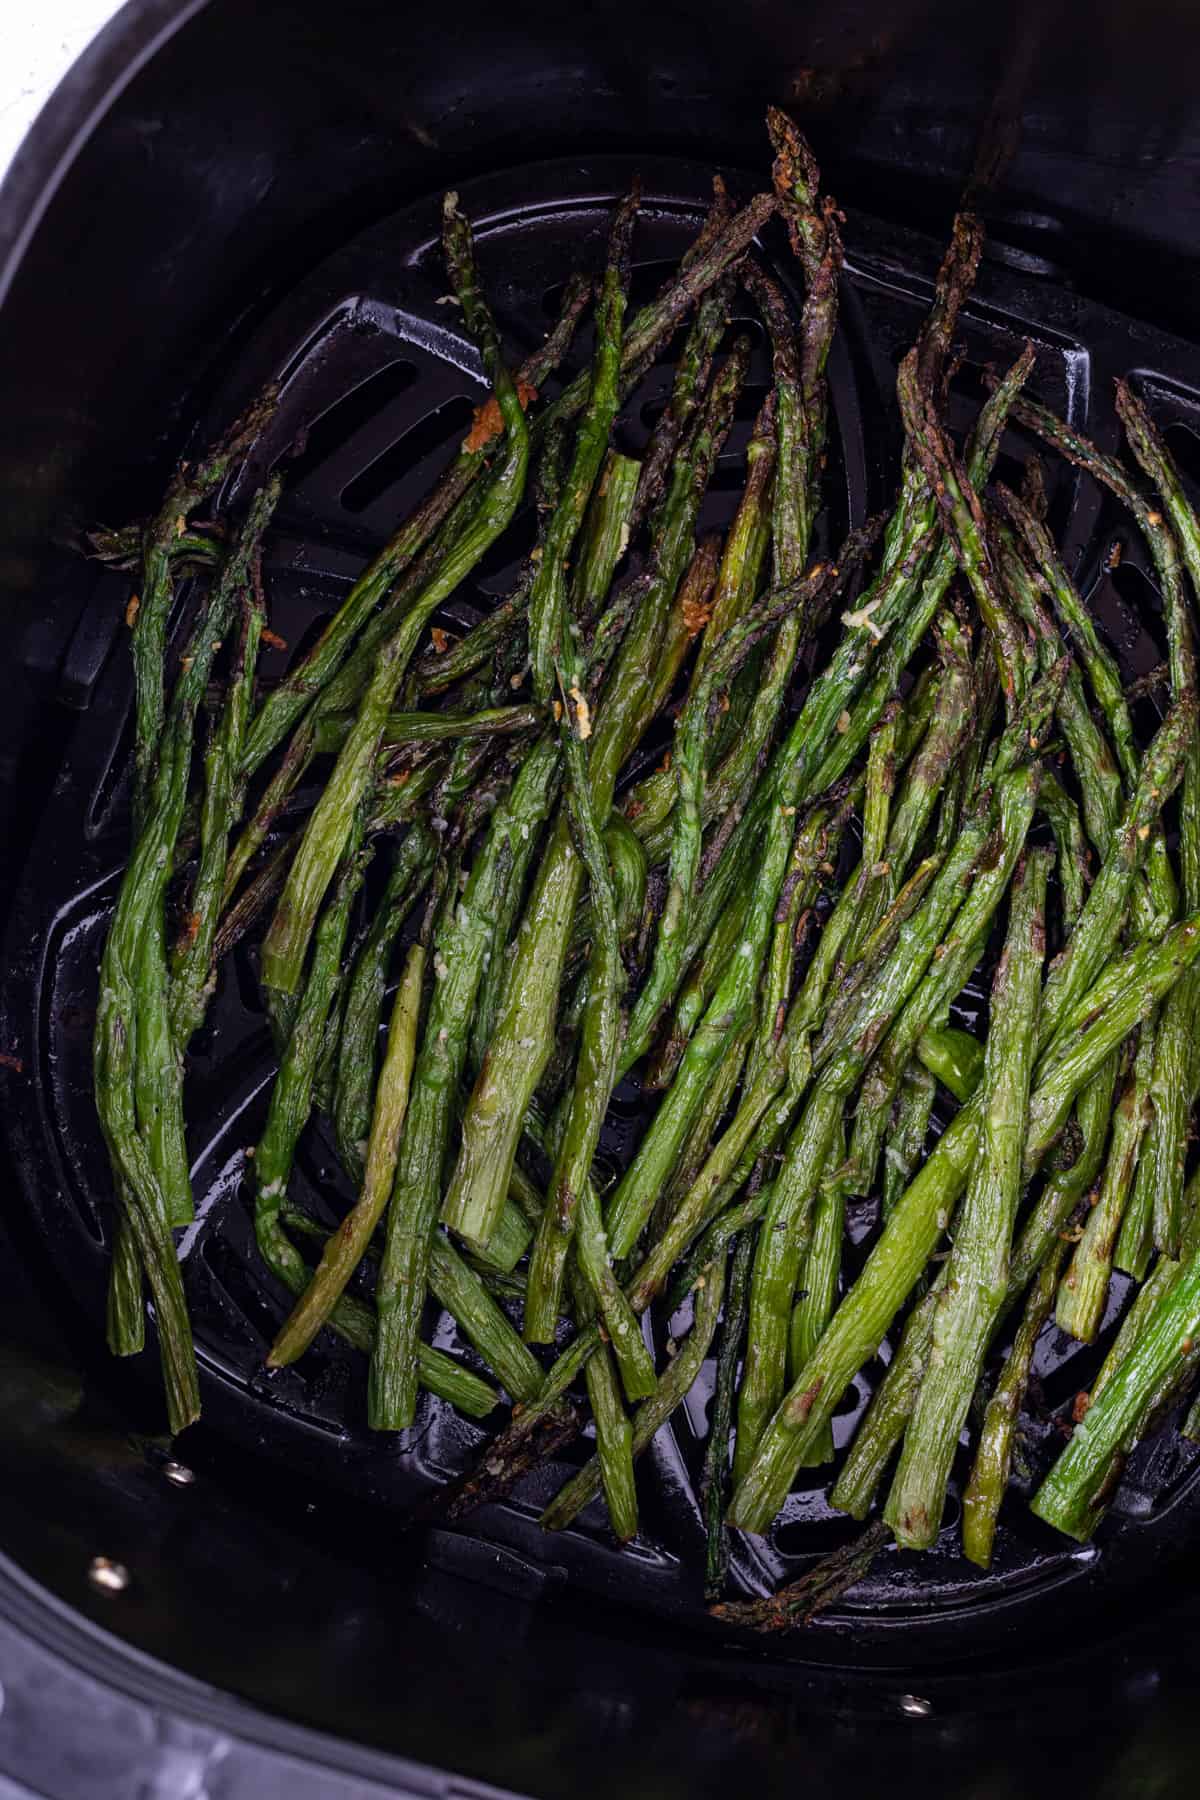 Crispy asparagus in an air fryer basket.